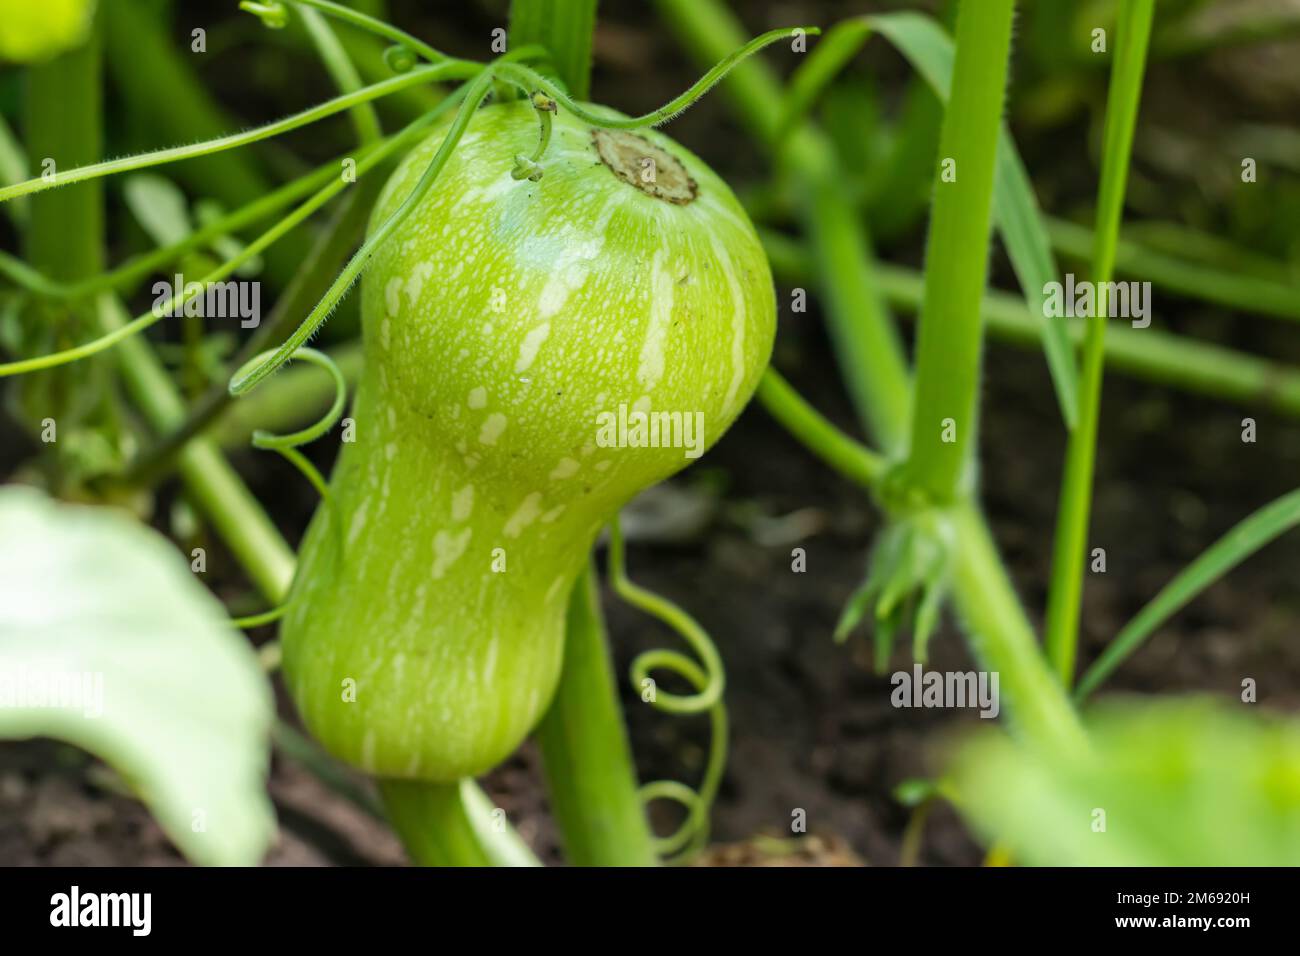 Zucchini plant. Zucchini flower. Green vegetable marrow growing on bush, Stock Photo